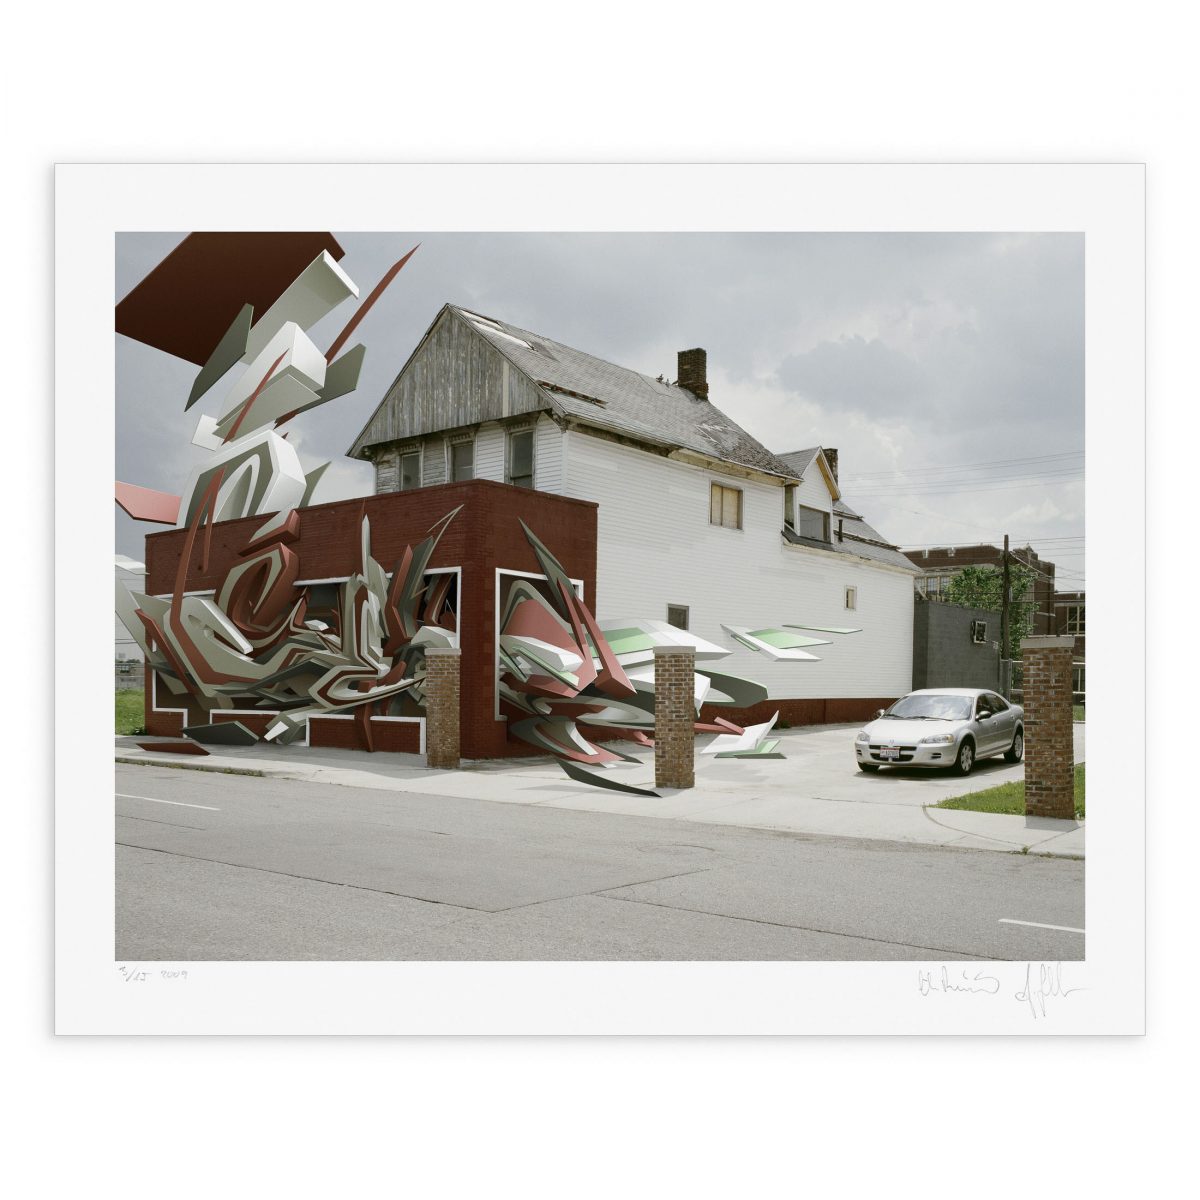 Mirko Reisser (DAIM), Andreas Gehrke | "DEIM - corner to corner in Detroit01" | Giclée FineArt Print (with UltraChrome K3 pigment-ink) on Hahnemuehle, Photo Rag 310 gsm bright white acid free Paper | 33,6 x 43,3 cm / 13.2" x 17" (Paper size: 40 x